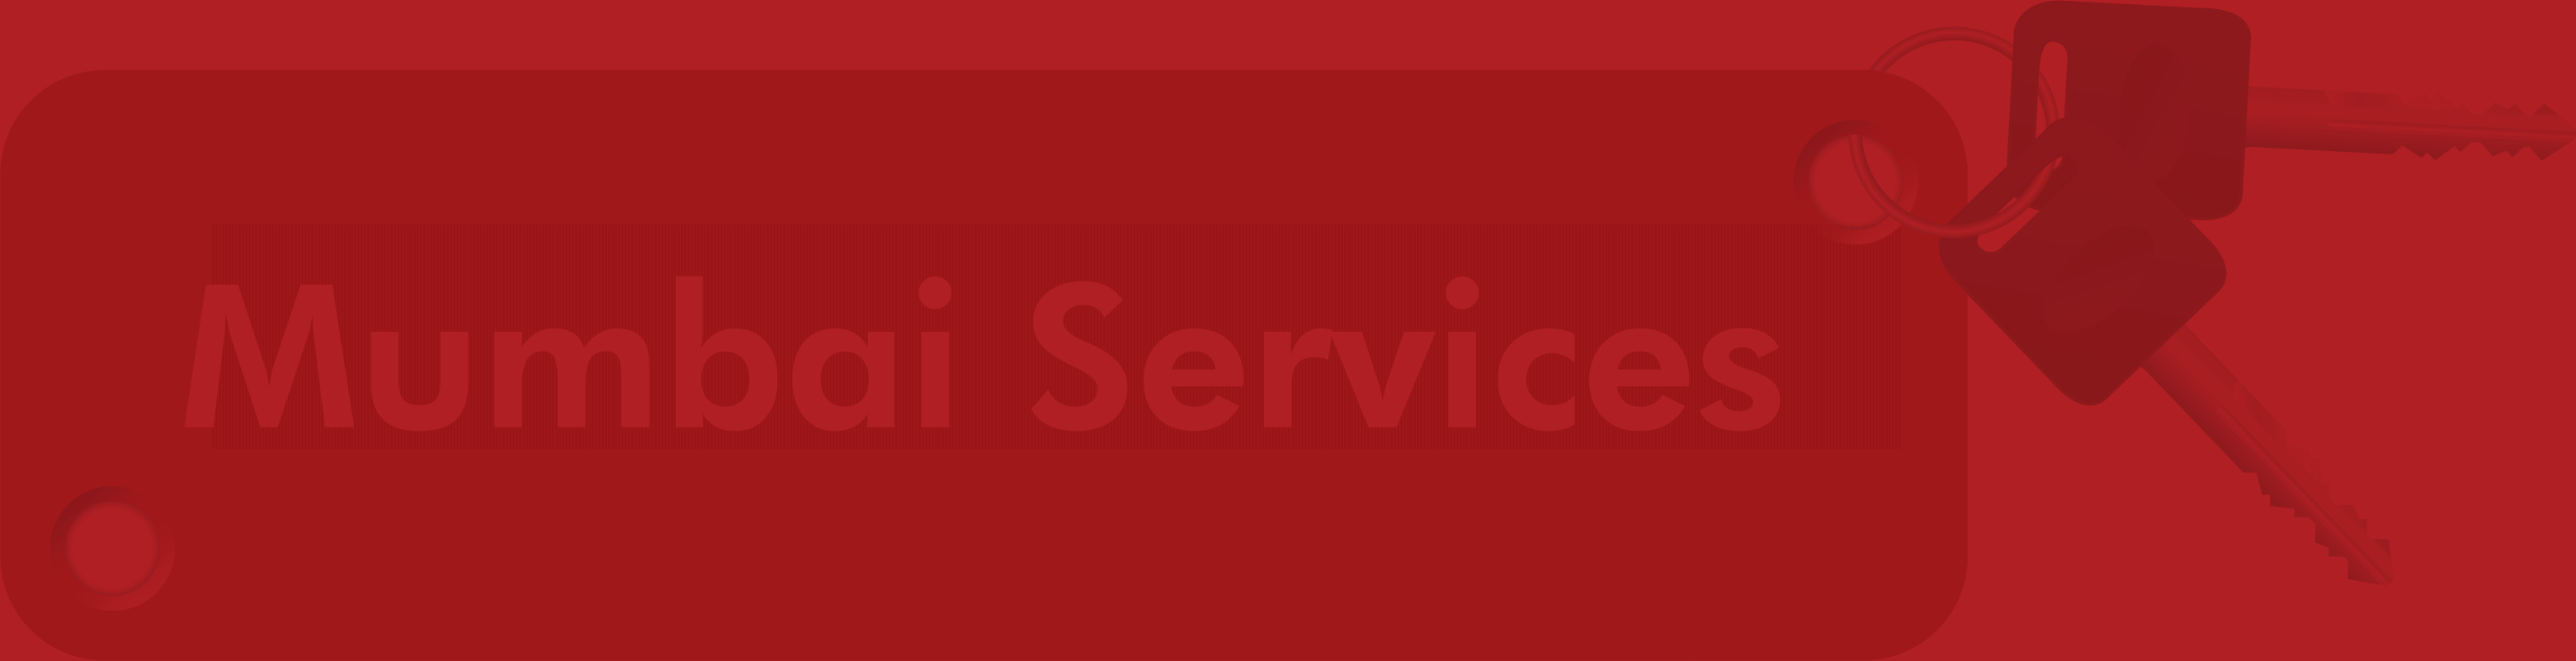 Mumbai Services